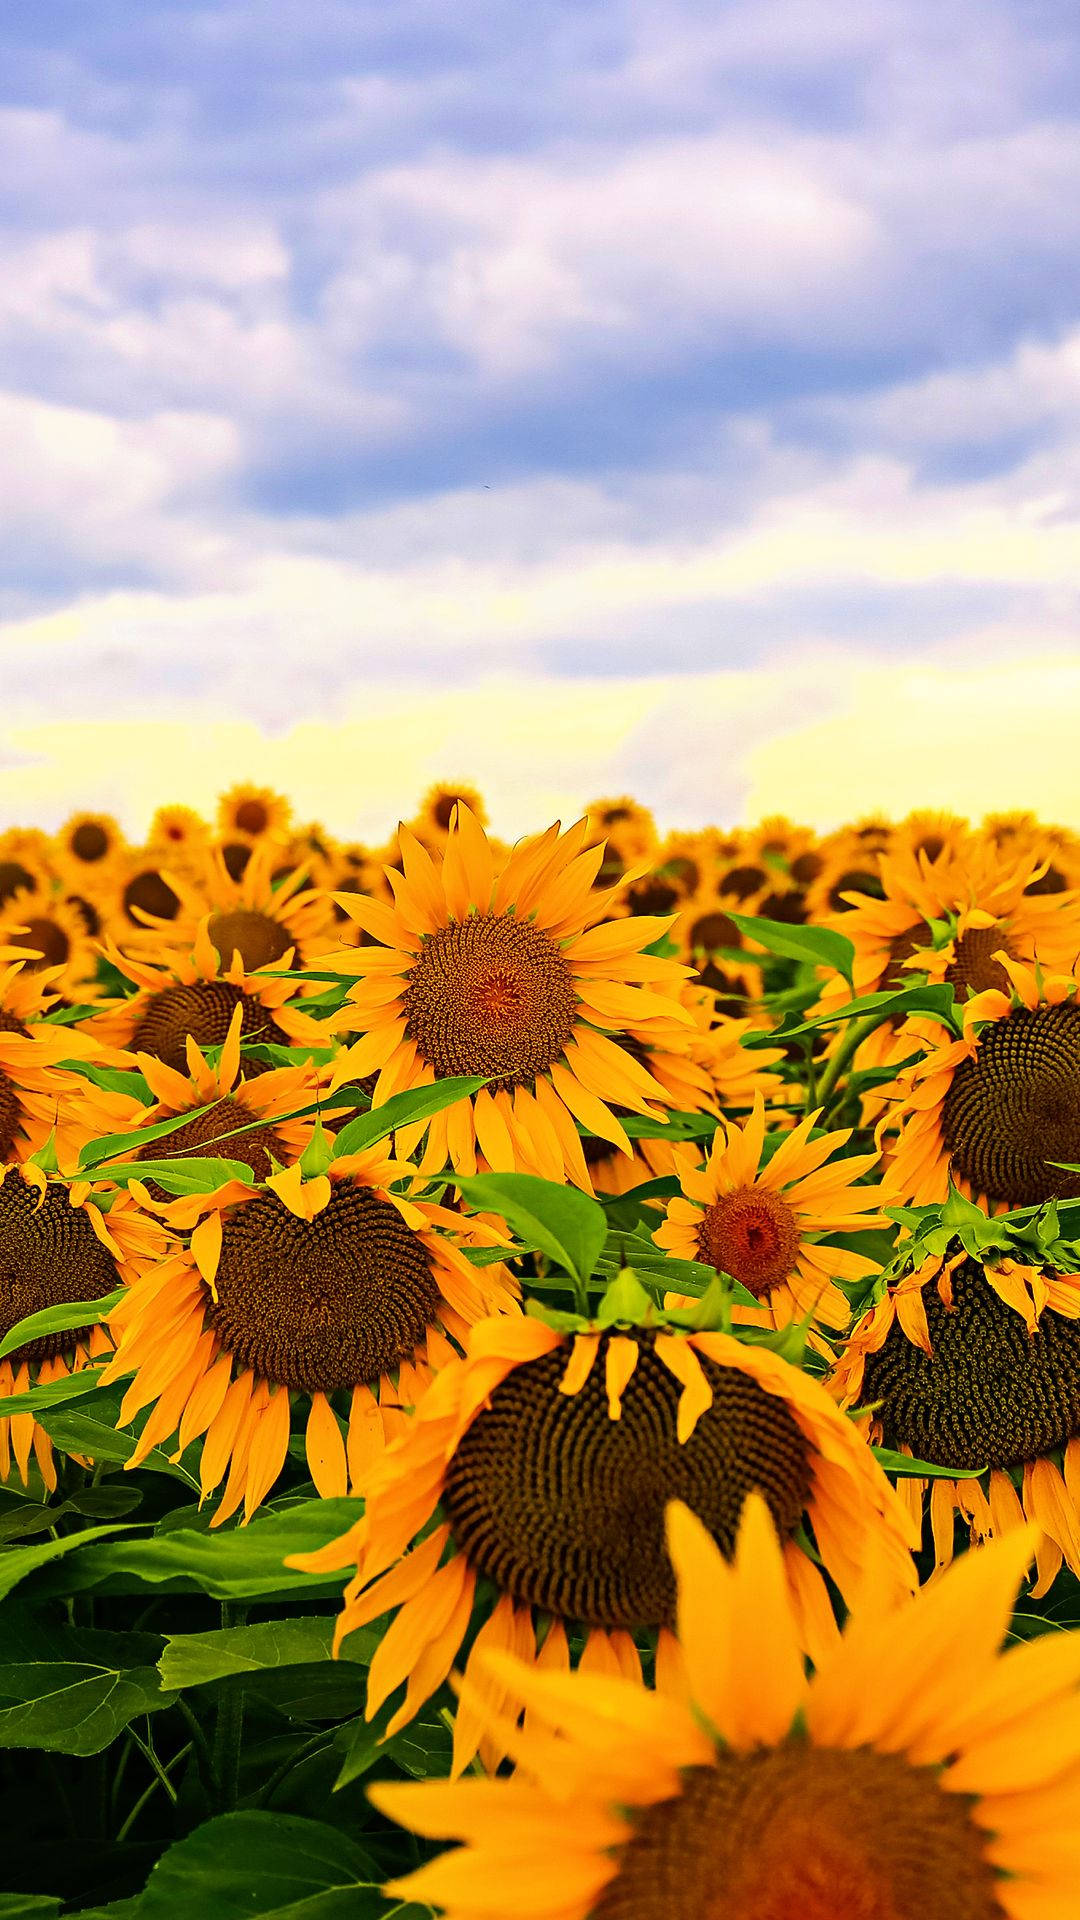 Aesthetic Shot Of Sunflowers Iphone Background